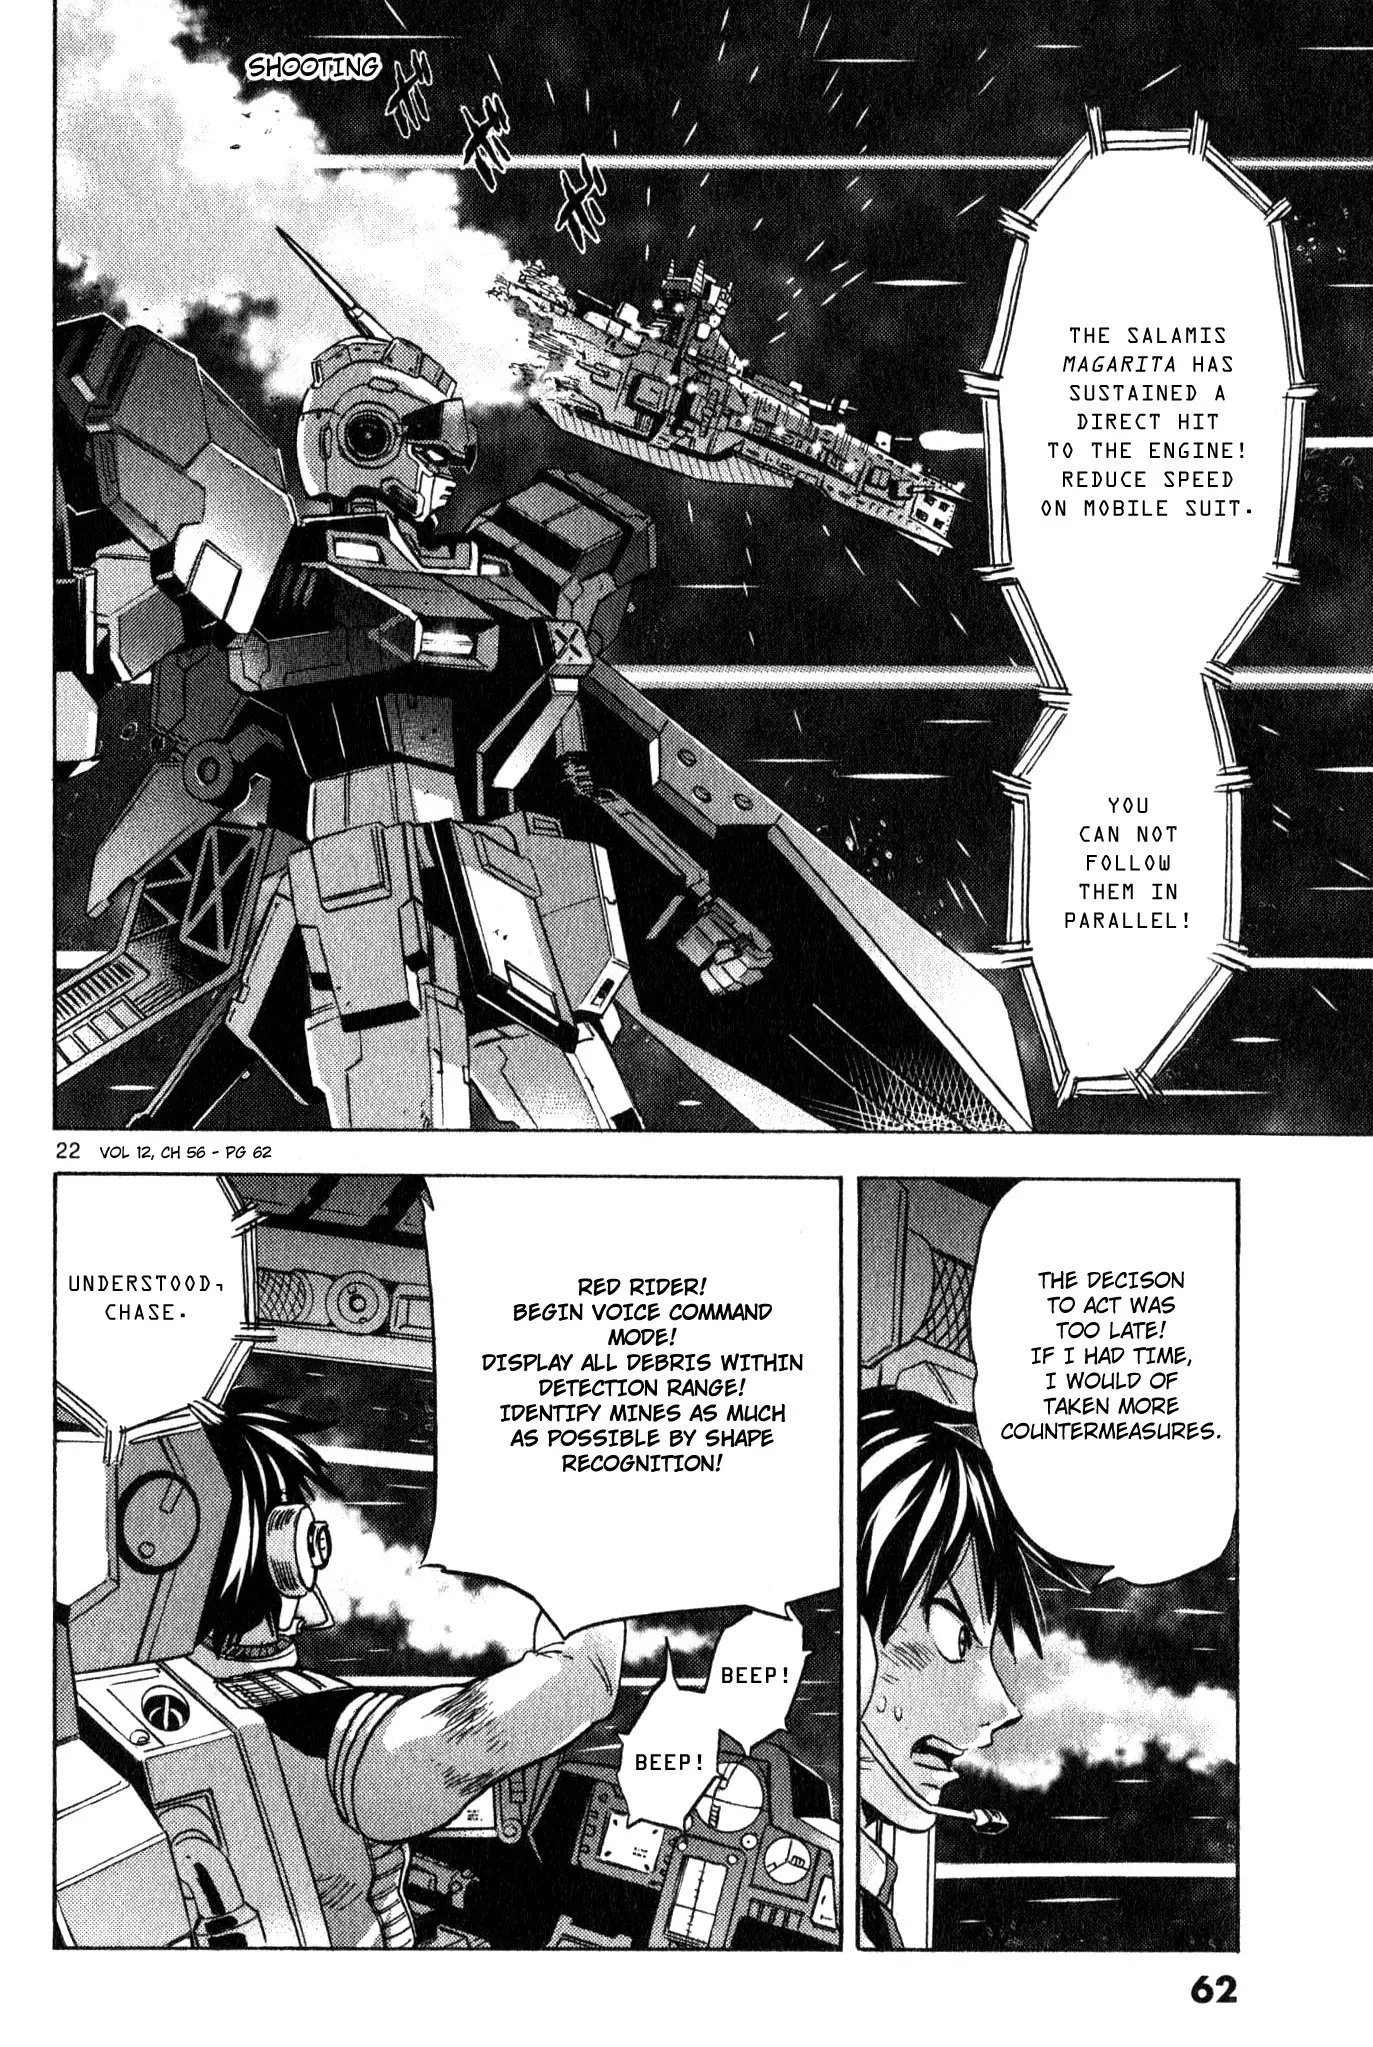 Mobile Suit Gundam Aggressor - 56 page 24-45680545